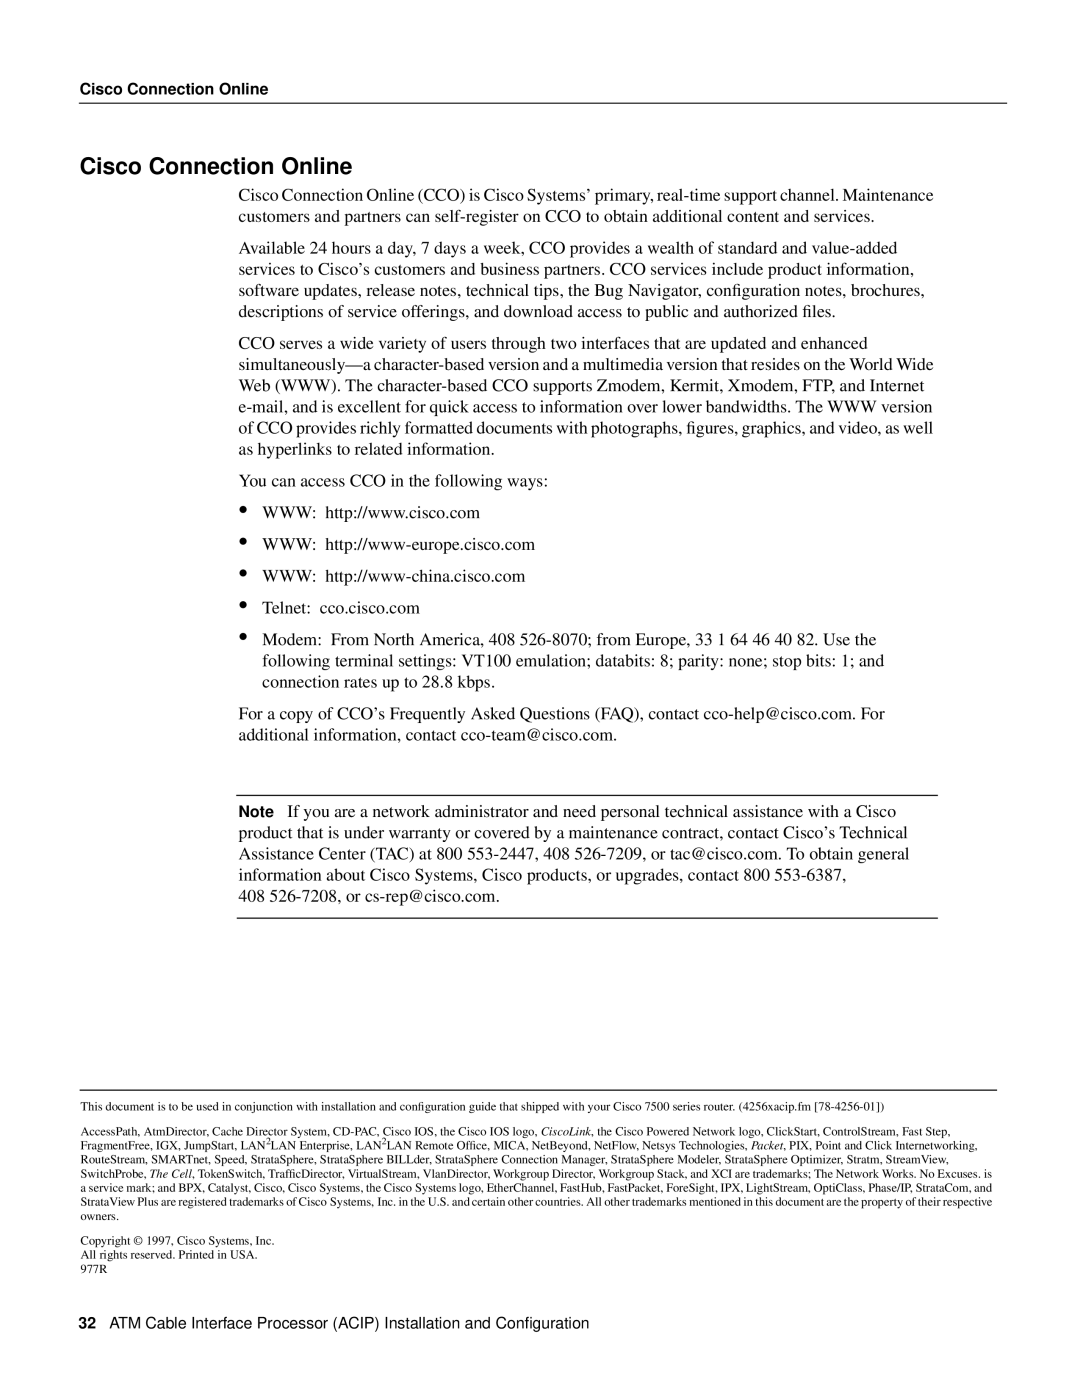 Cisco Systems ACIP-SM(=) manual Cisco Connection Online 